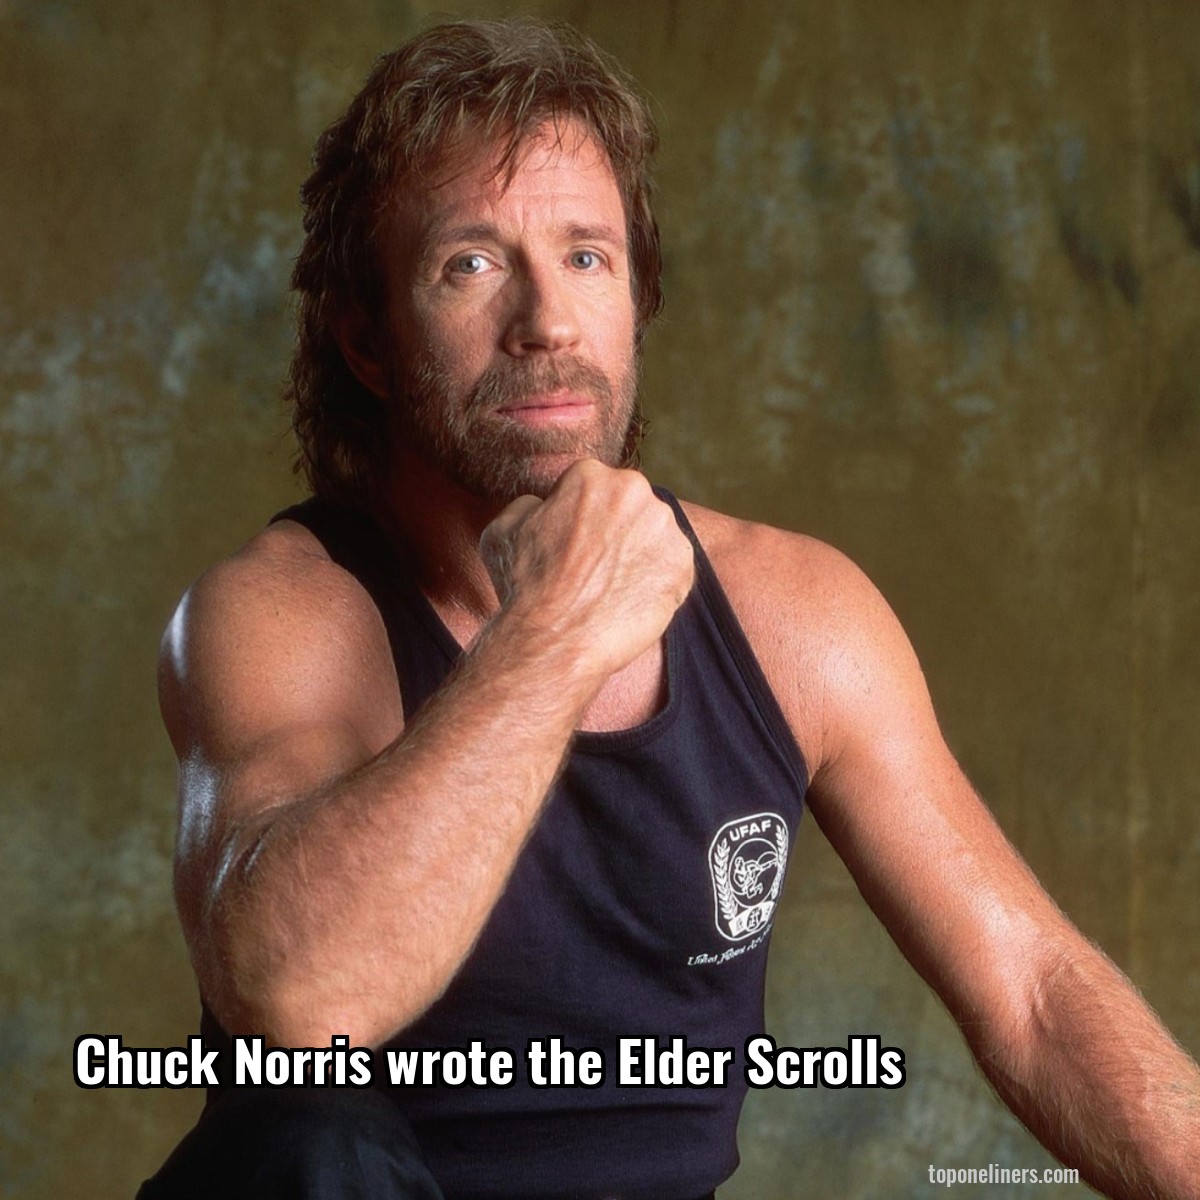 Chuck Norris wrote the Elder Scrolls